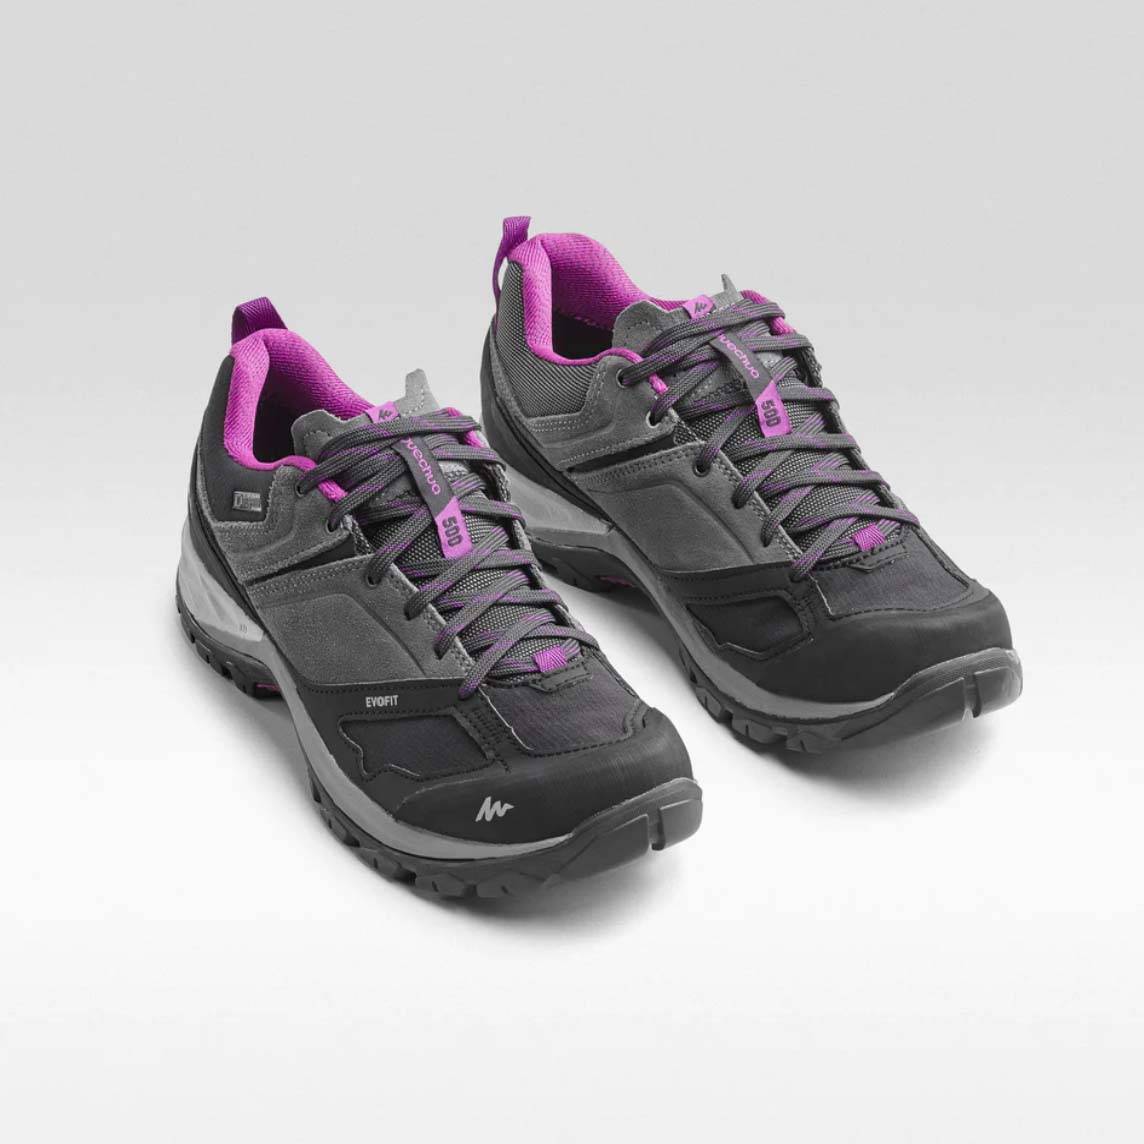 Dark grey and purple hiking shoes